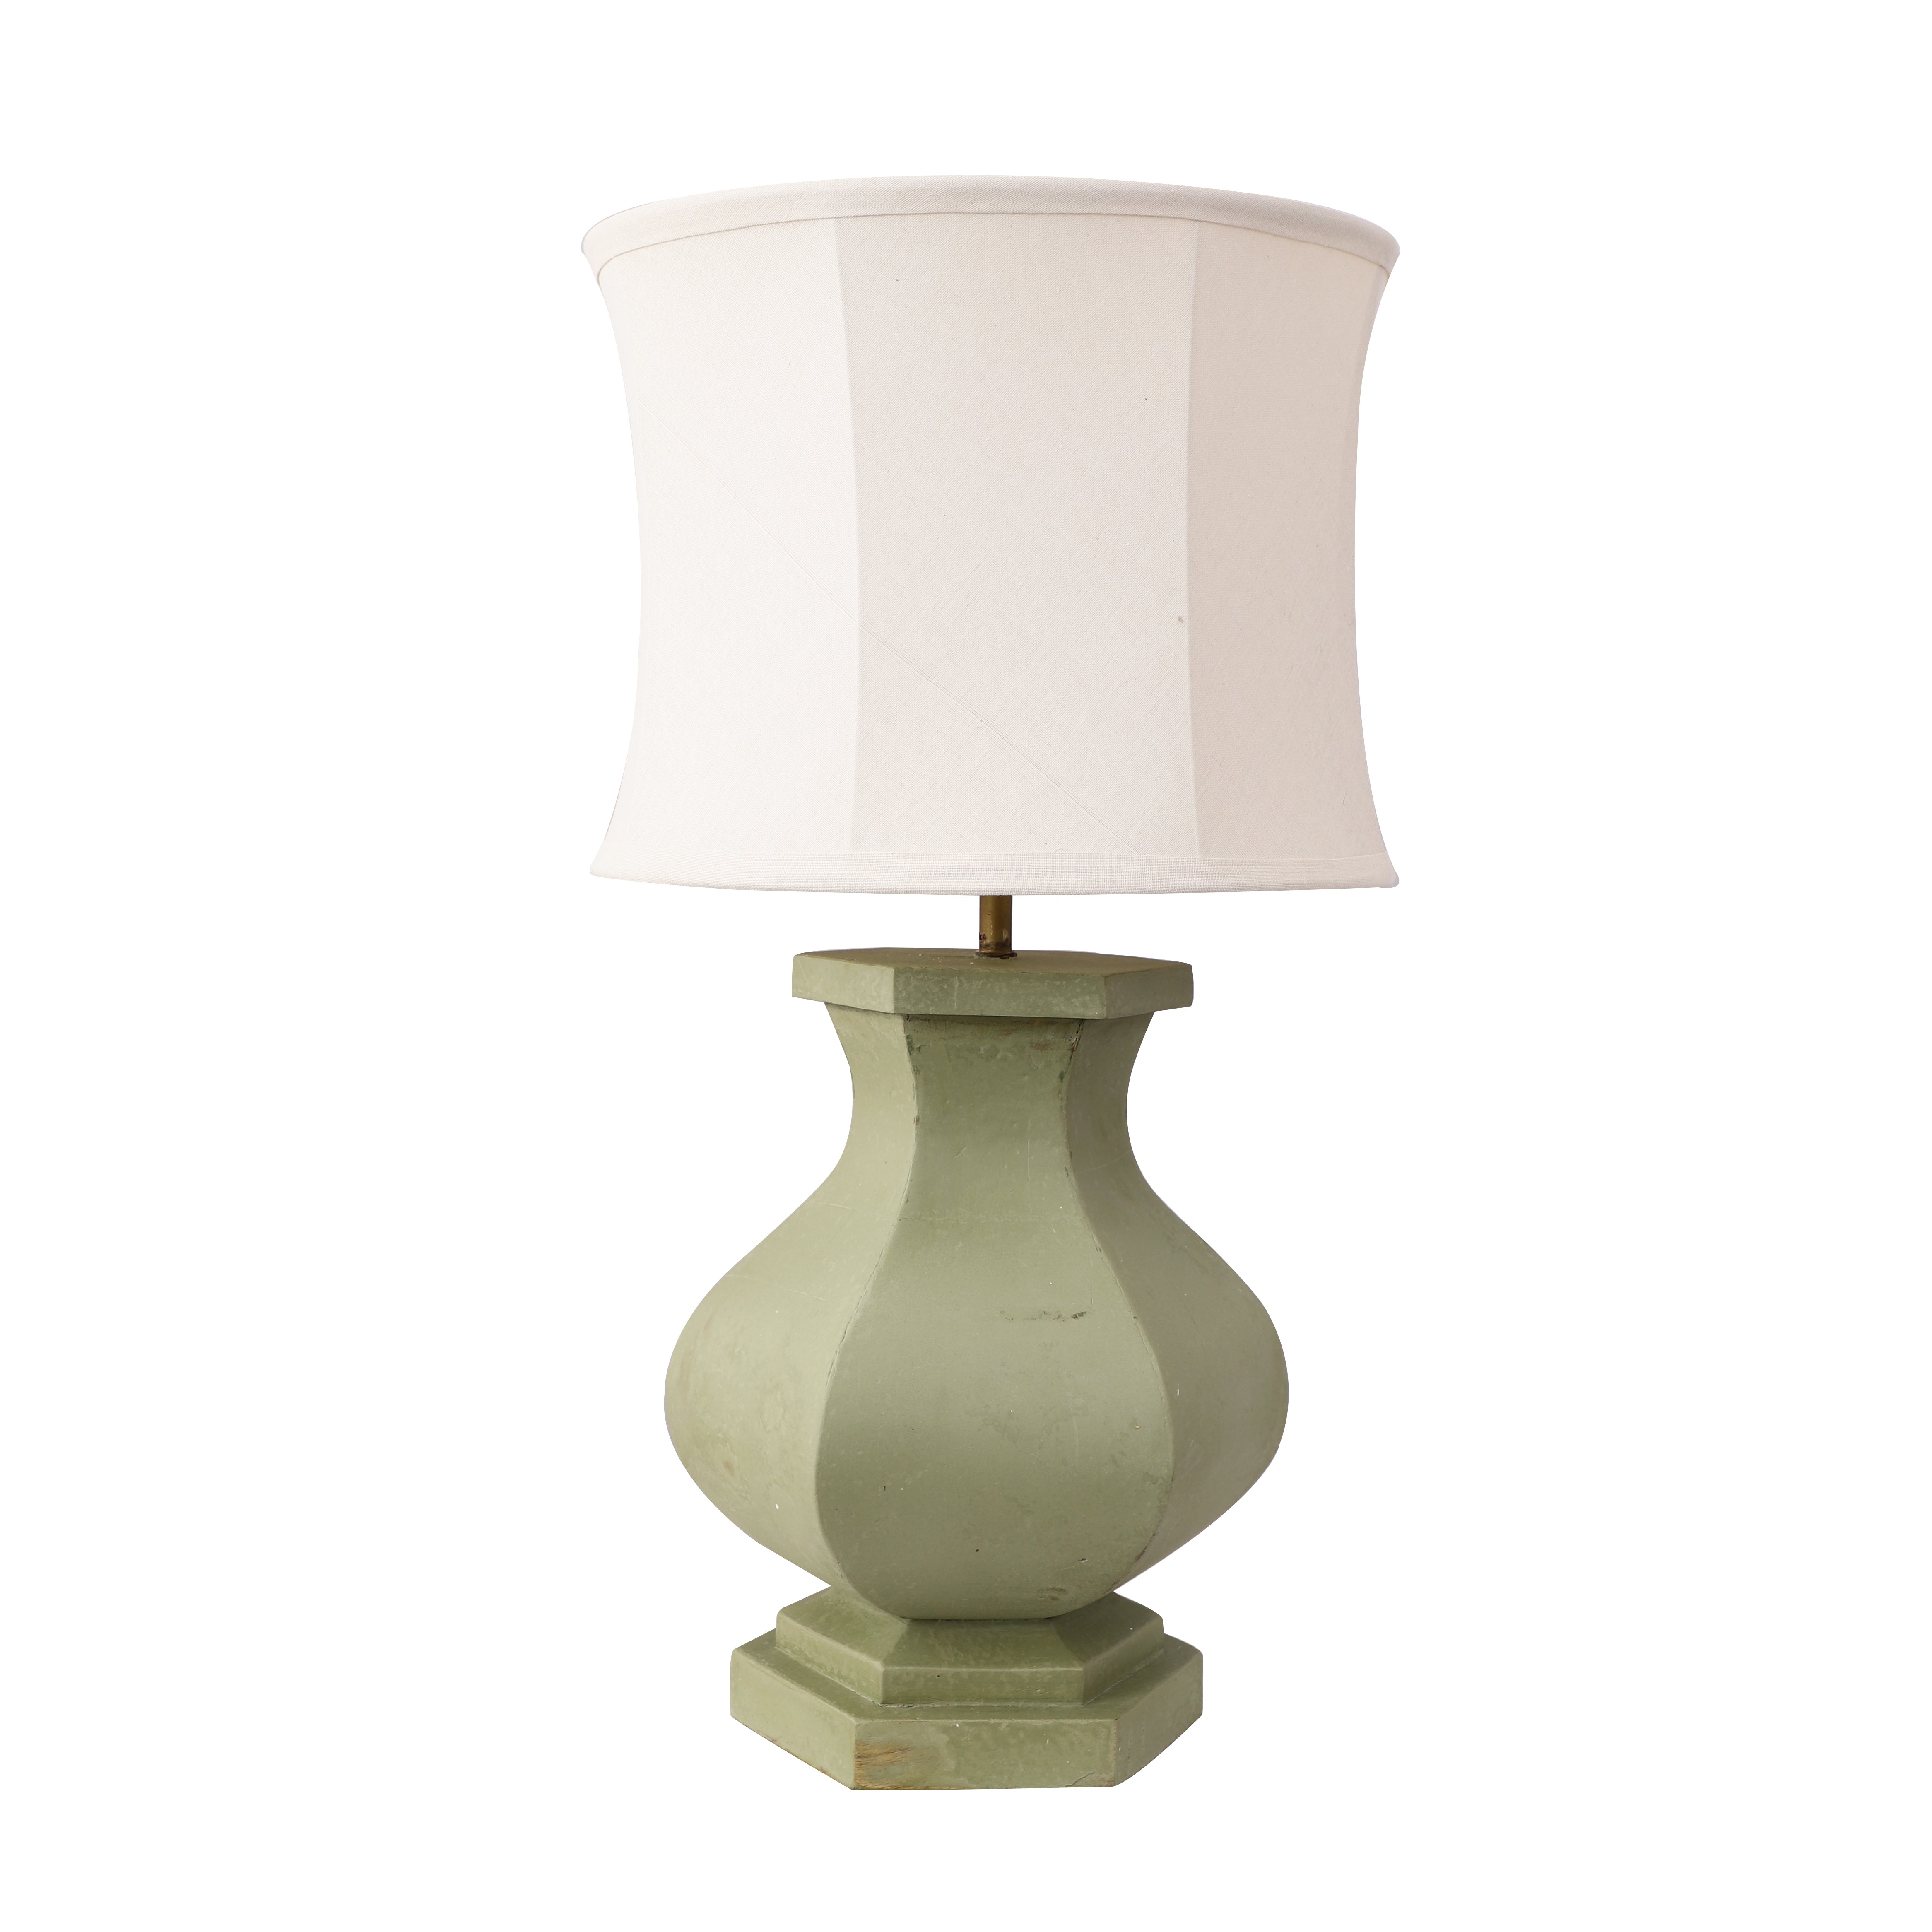 Evergreen Rustic Table Lamp